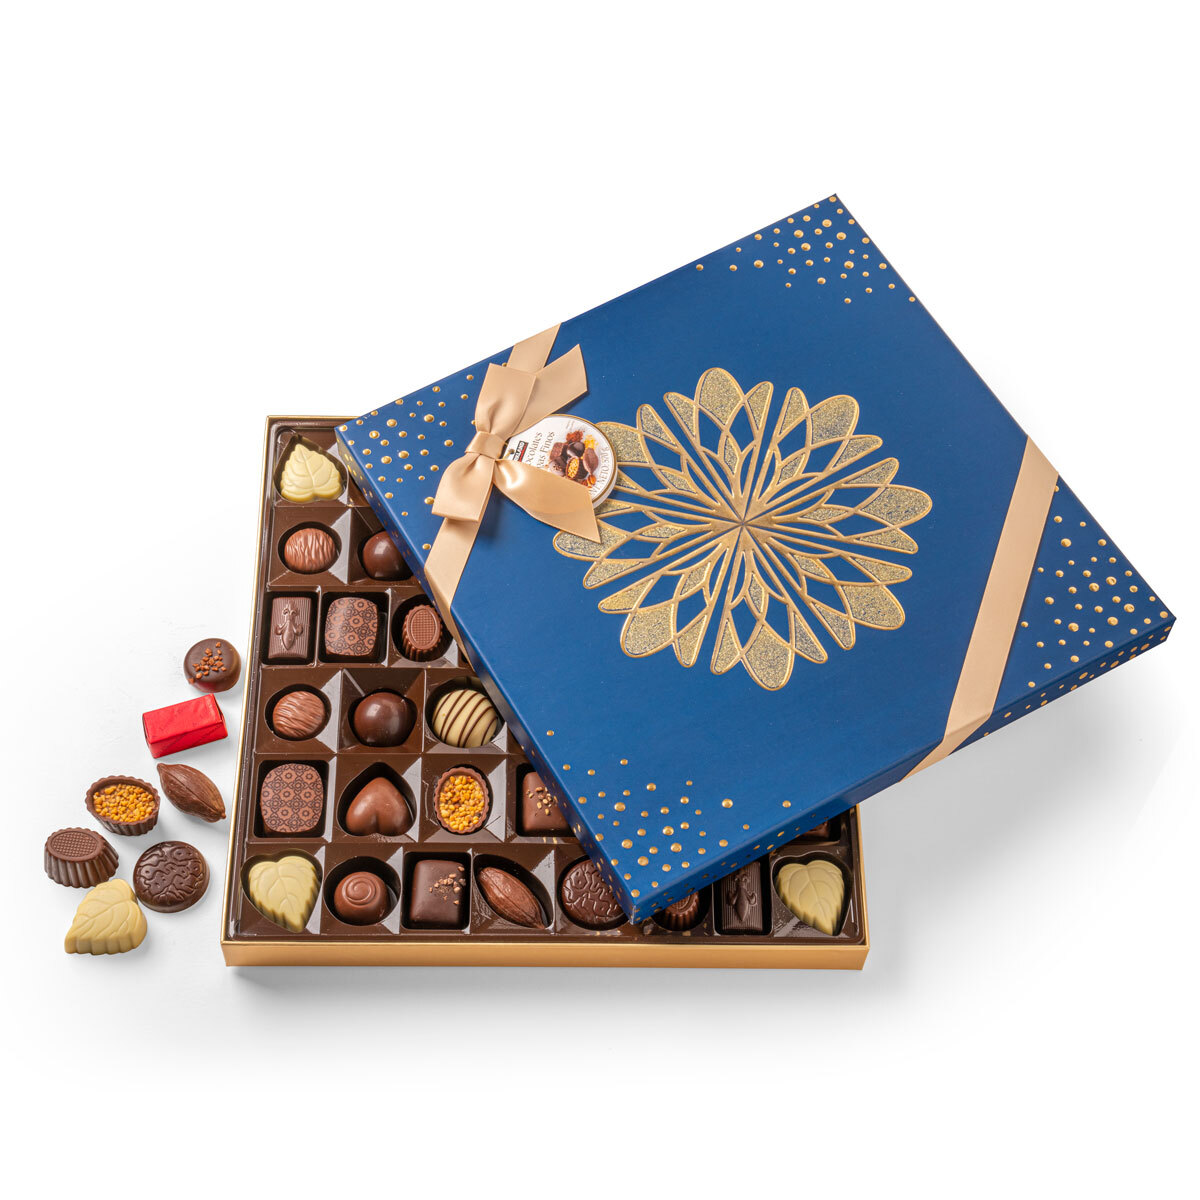 Kirkland Signature Luxury Belgian Chocolates in Blue Gift Box, 570g Open